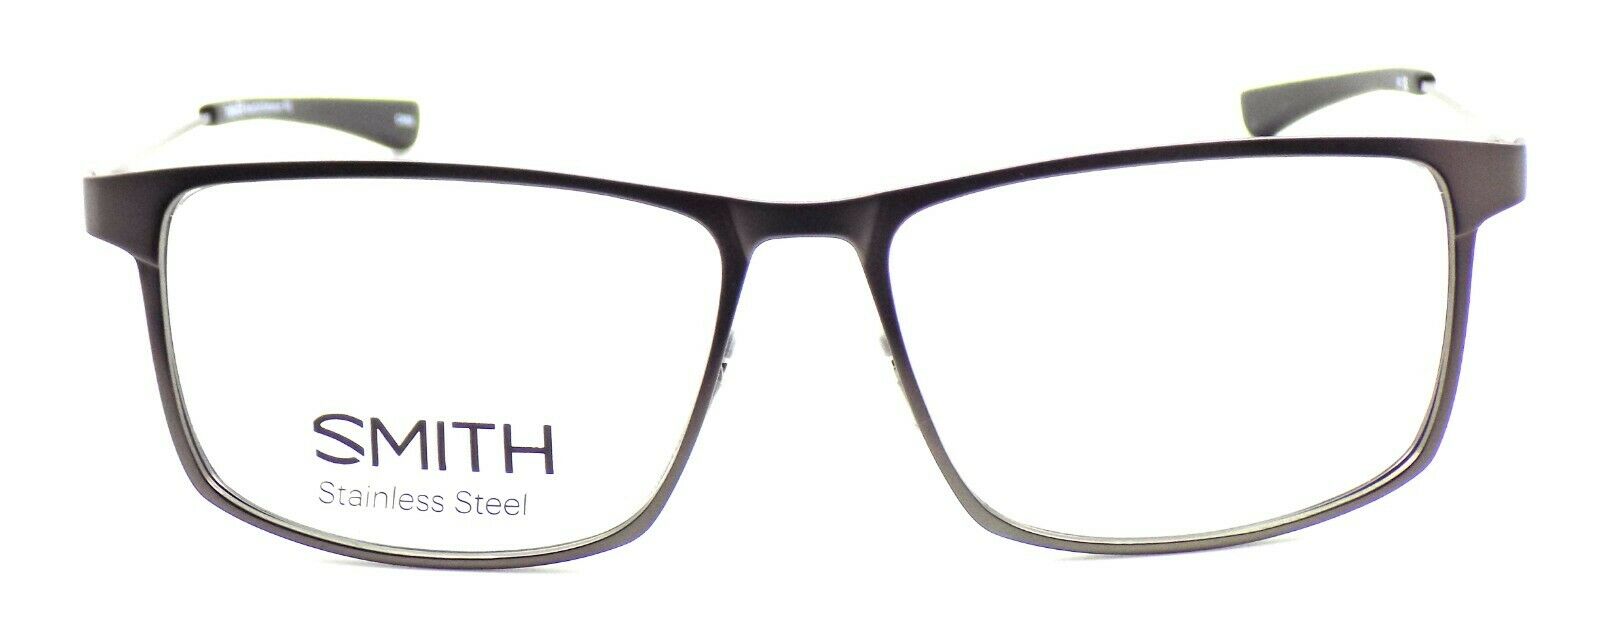 2-SMITH Optics Index56 FRE Men's Eyeglasses Frames 56-15-140 Matte Dark Ruthenium-762753296283-IKSpecs